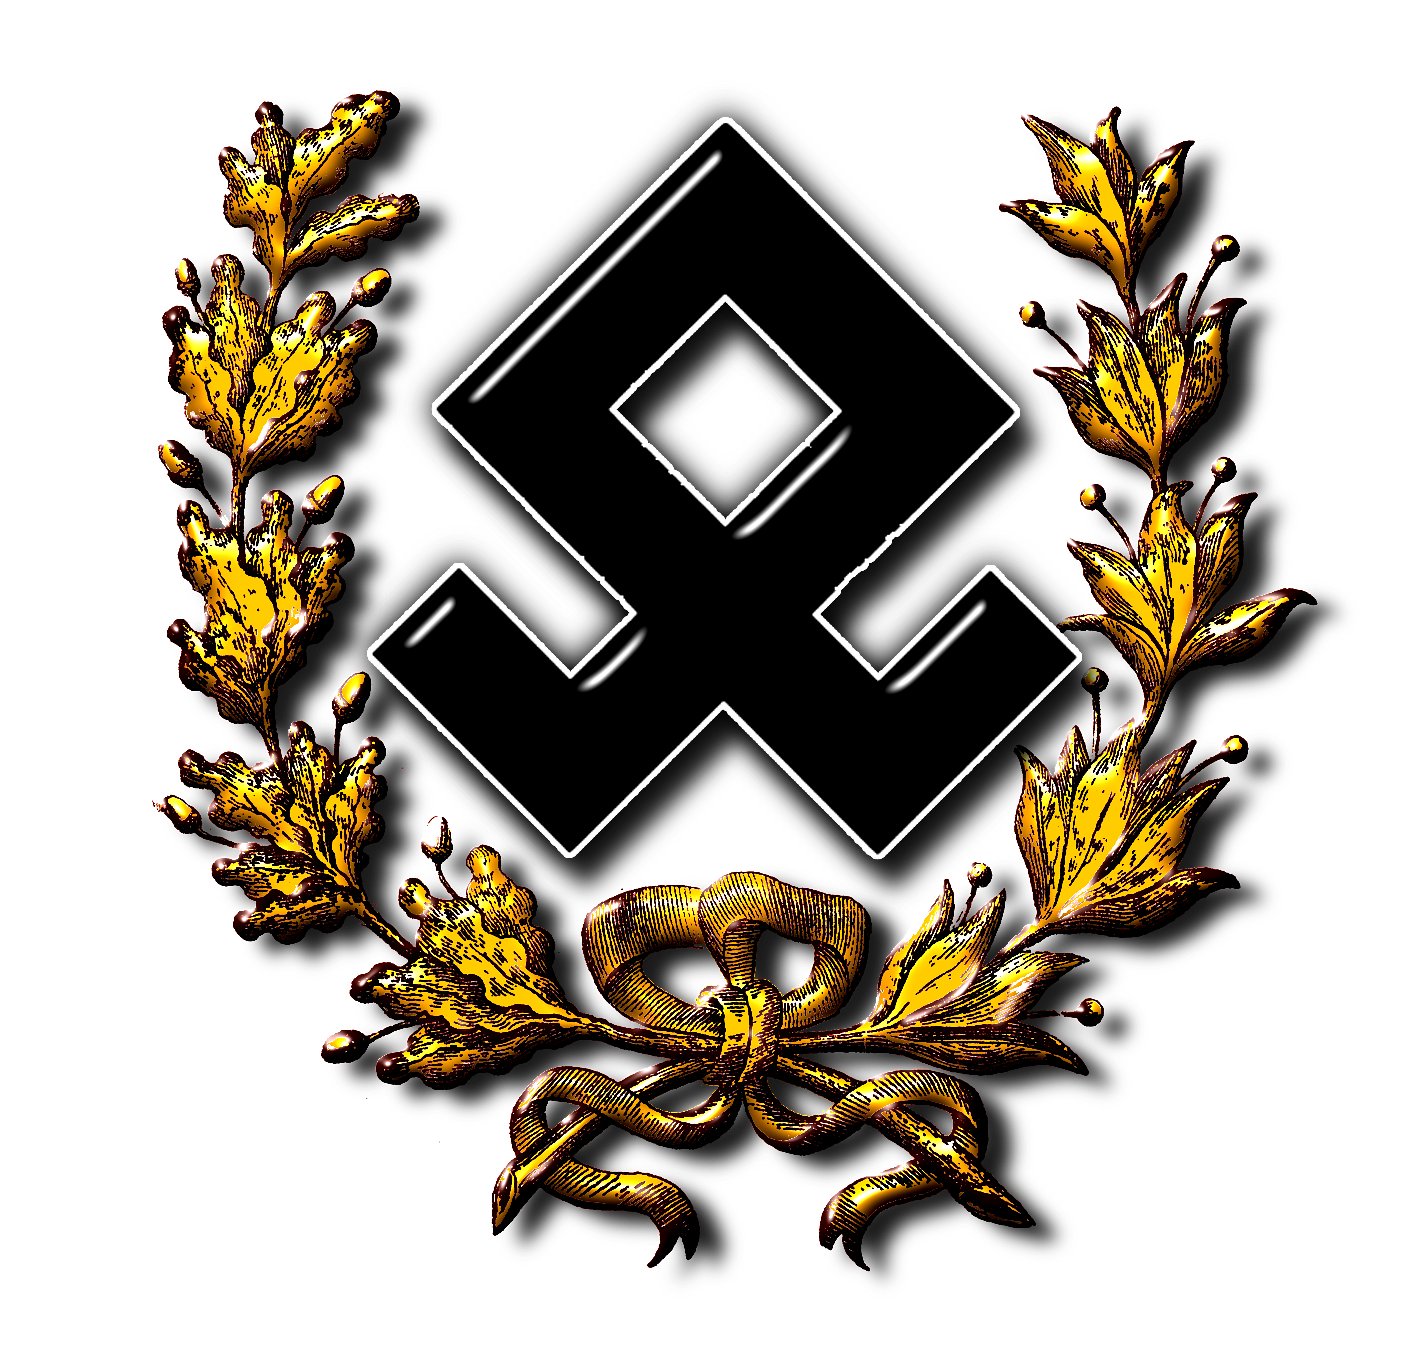 Фашистские z v. Руна одал. Нацистская руна одал. Руна одал символ. Руна одал у нацистов.